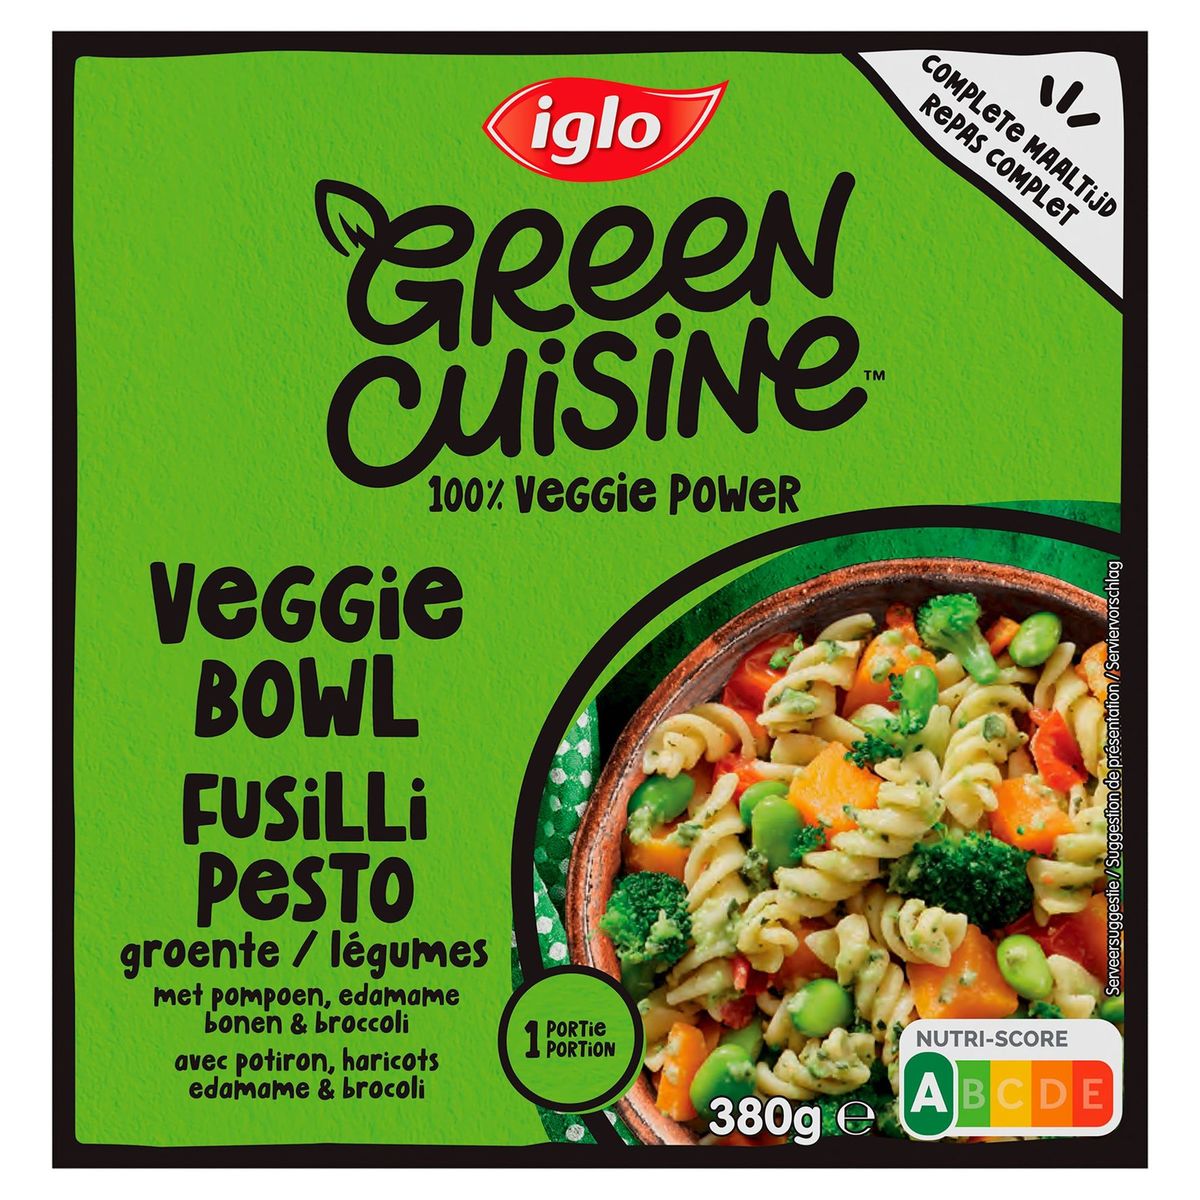 Iglo Green Cuisine Veggie Bowl Fusilli groente pesto 380 g